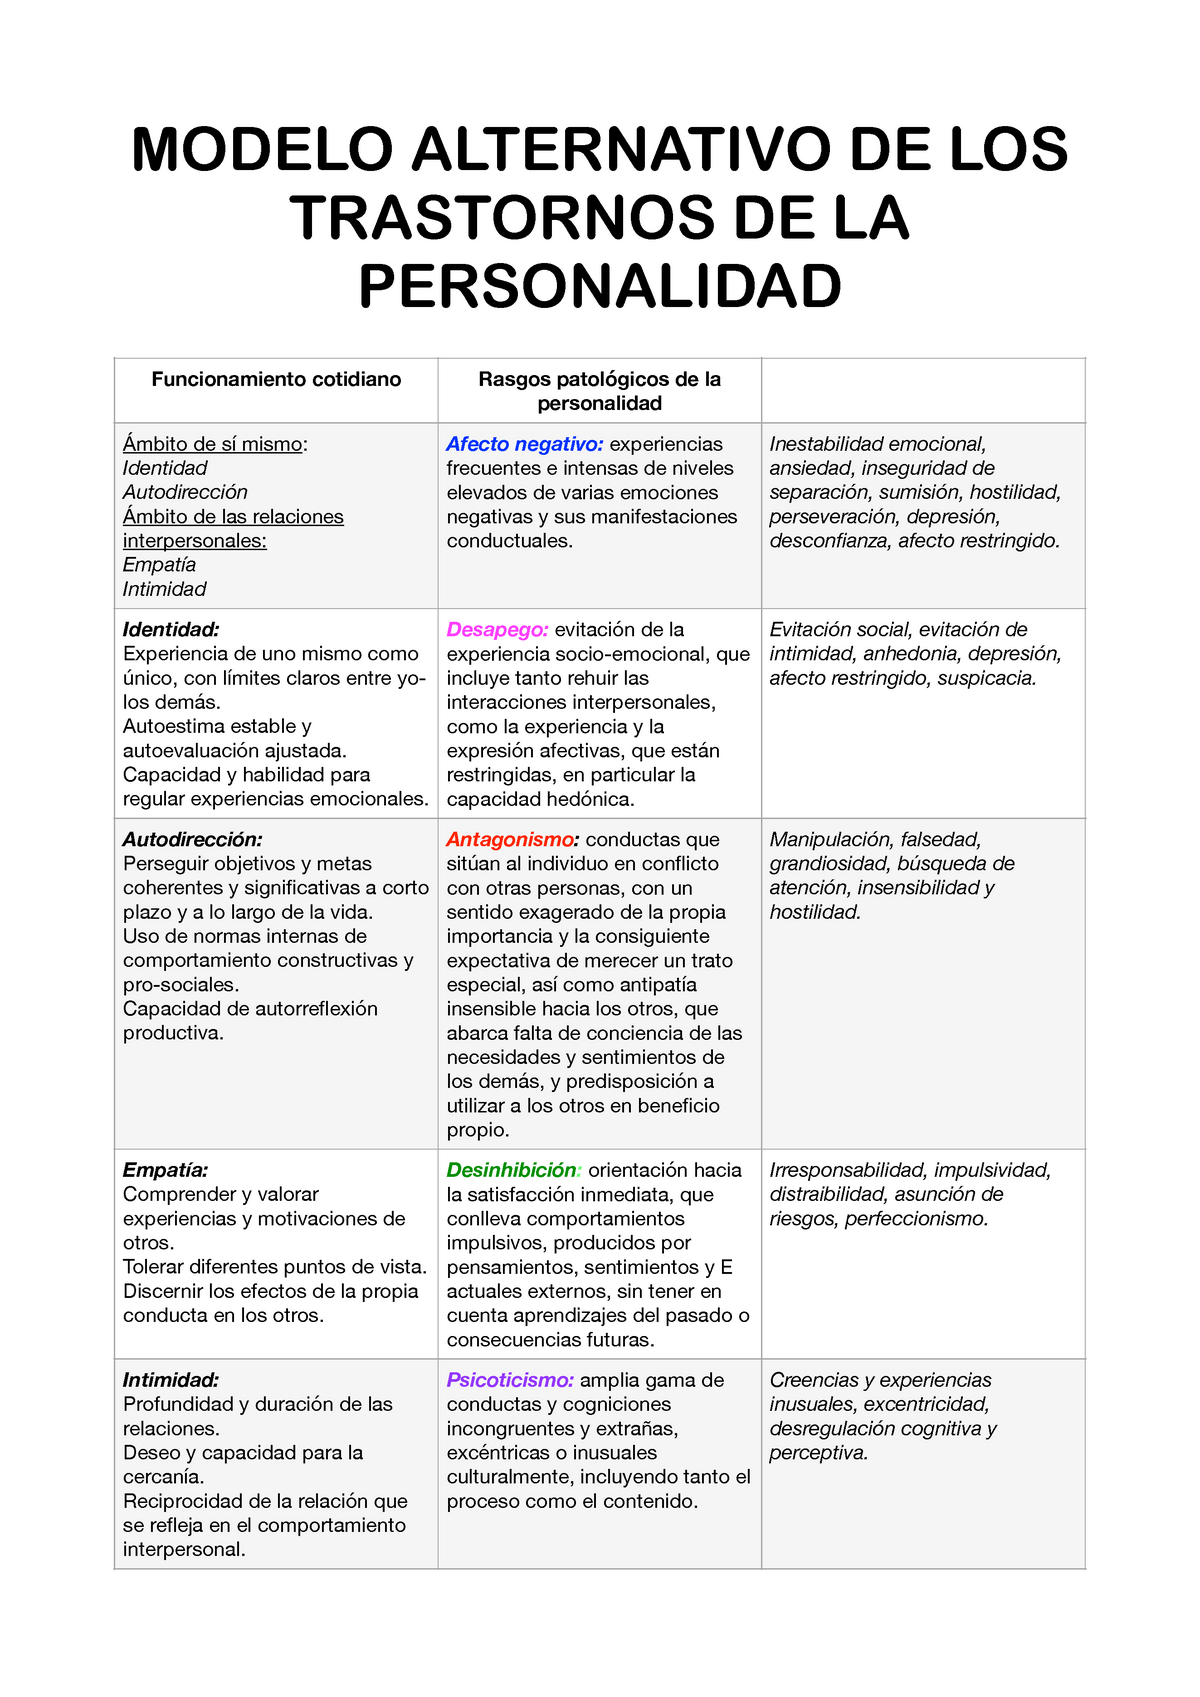 Modelo alternativo de trastornos de la personalidad - MODELO ALTERNATIVO DE  LOS TRASTORNOS DE LA - Studocu